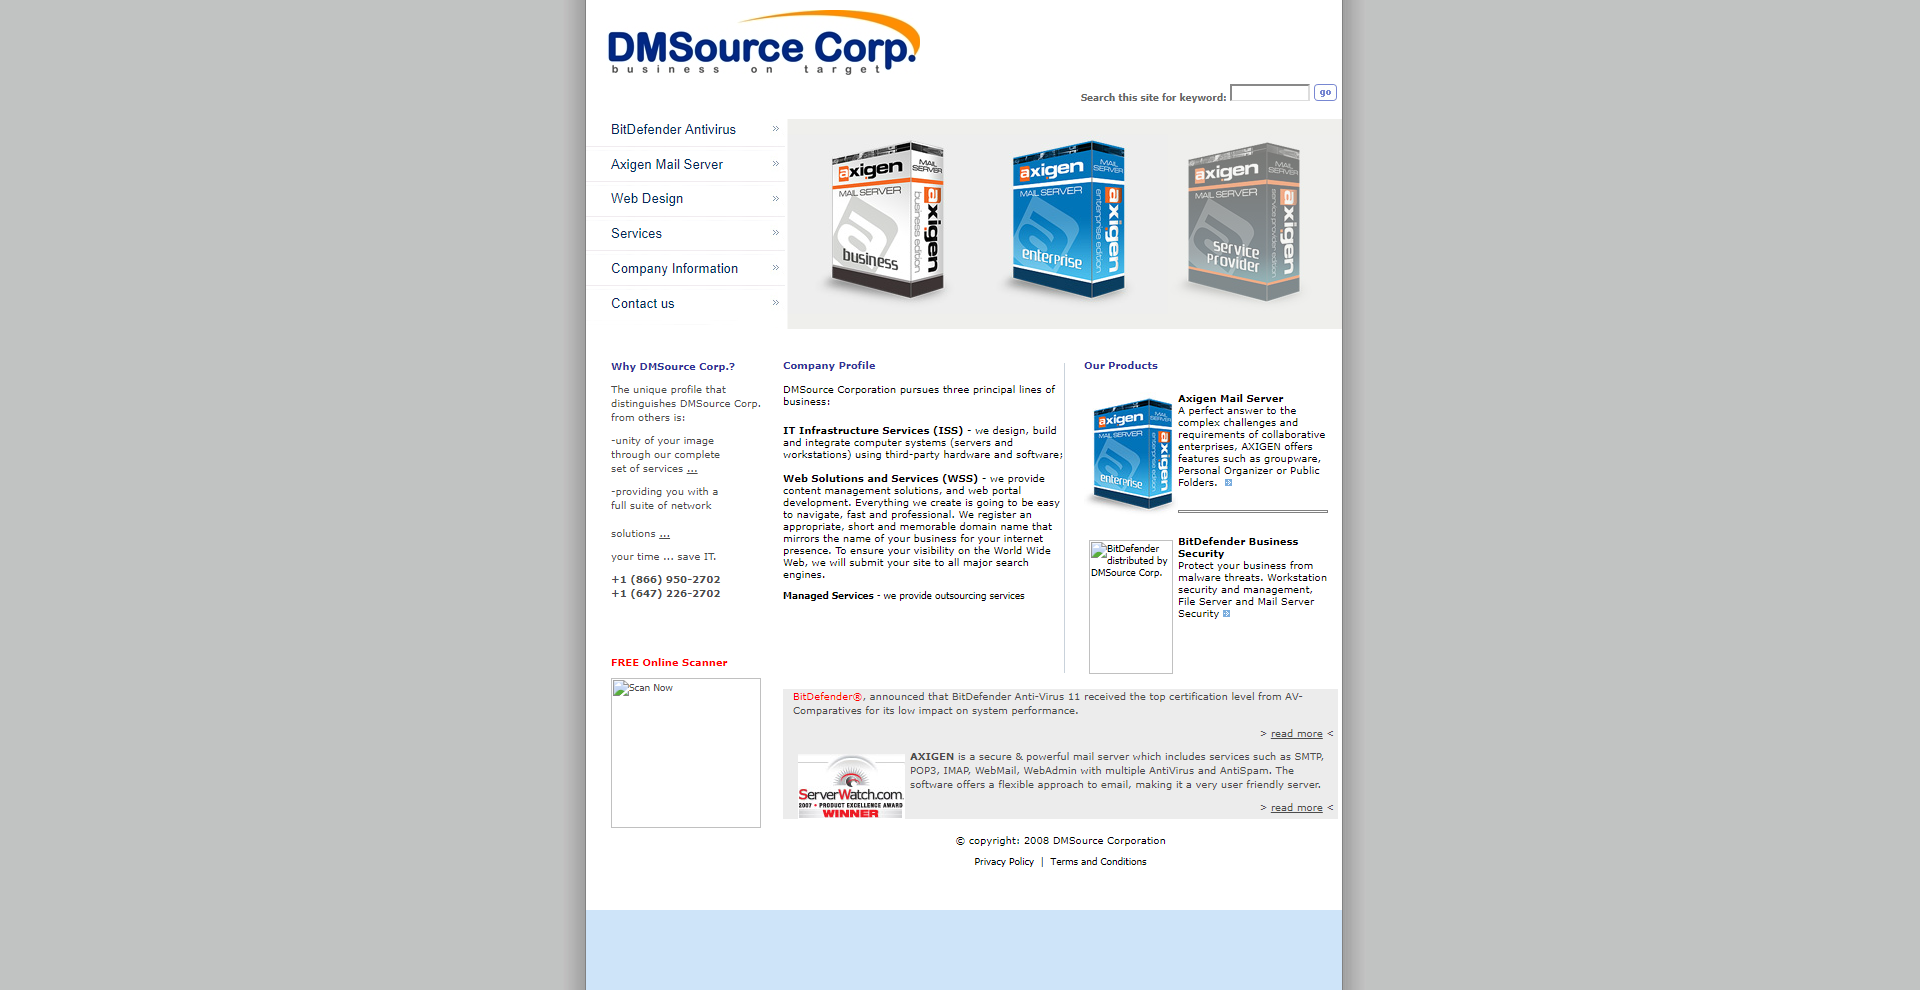 DMSource Corp